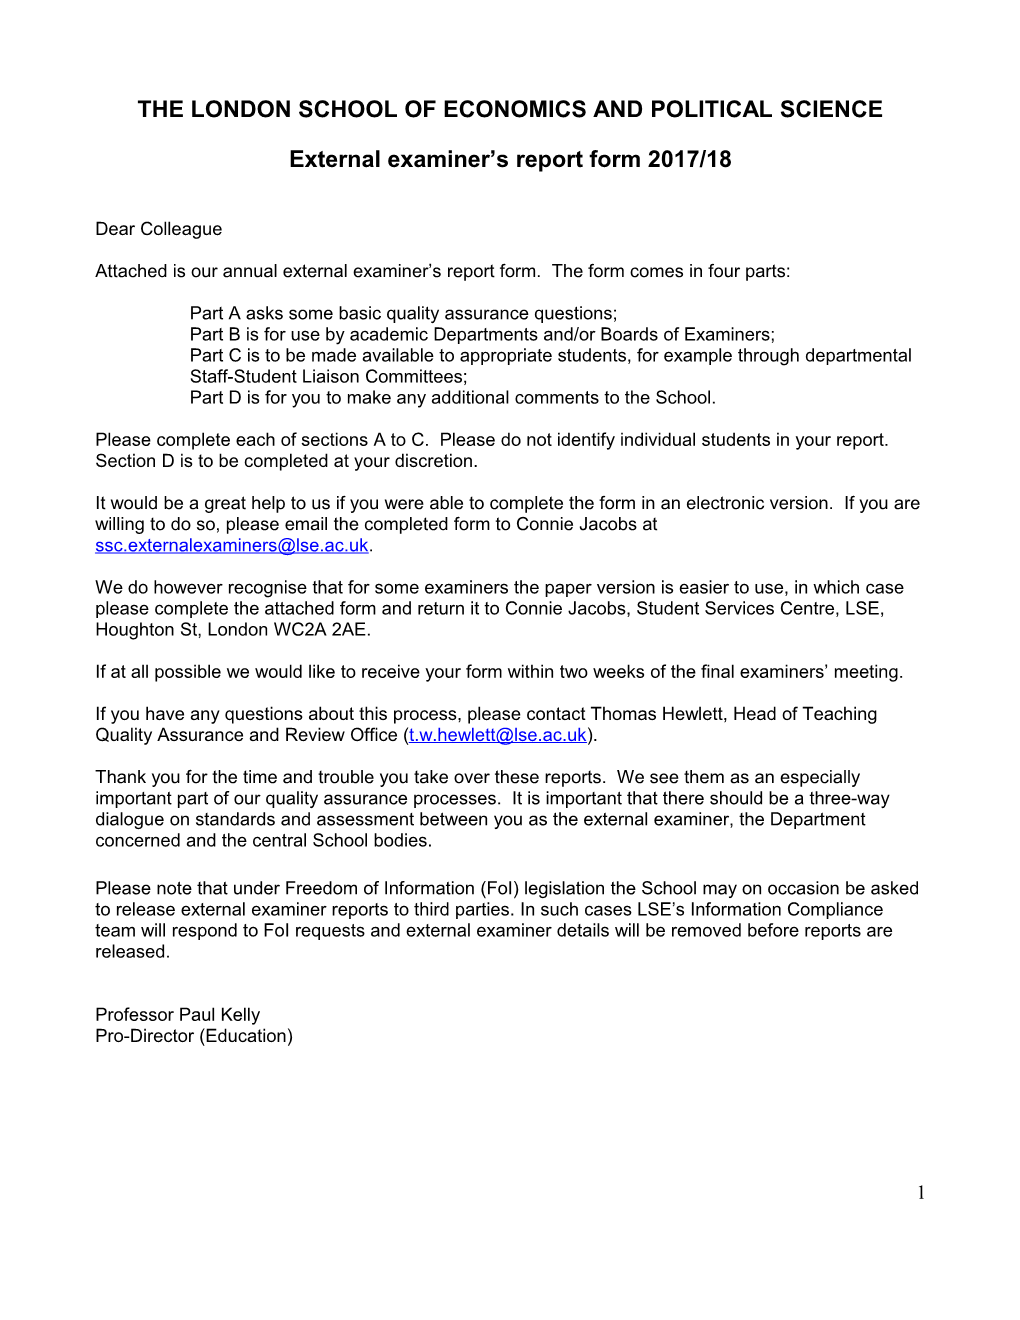 External Examiner Report Form